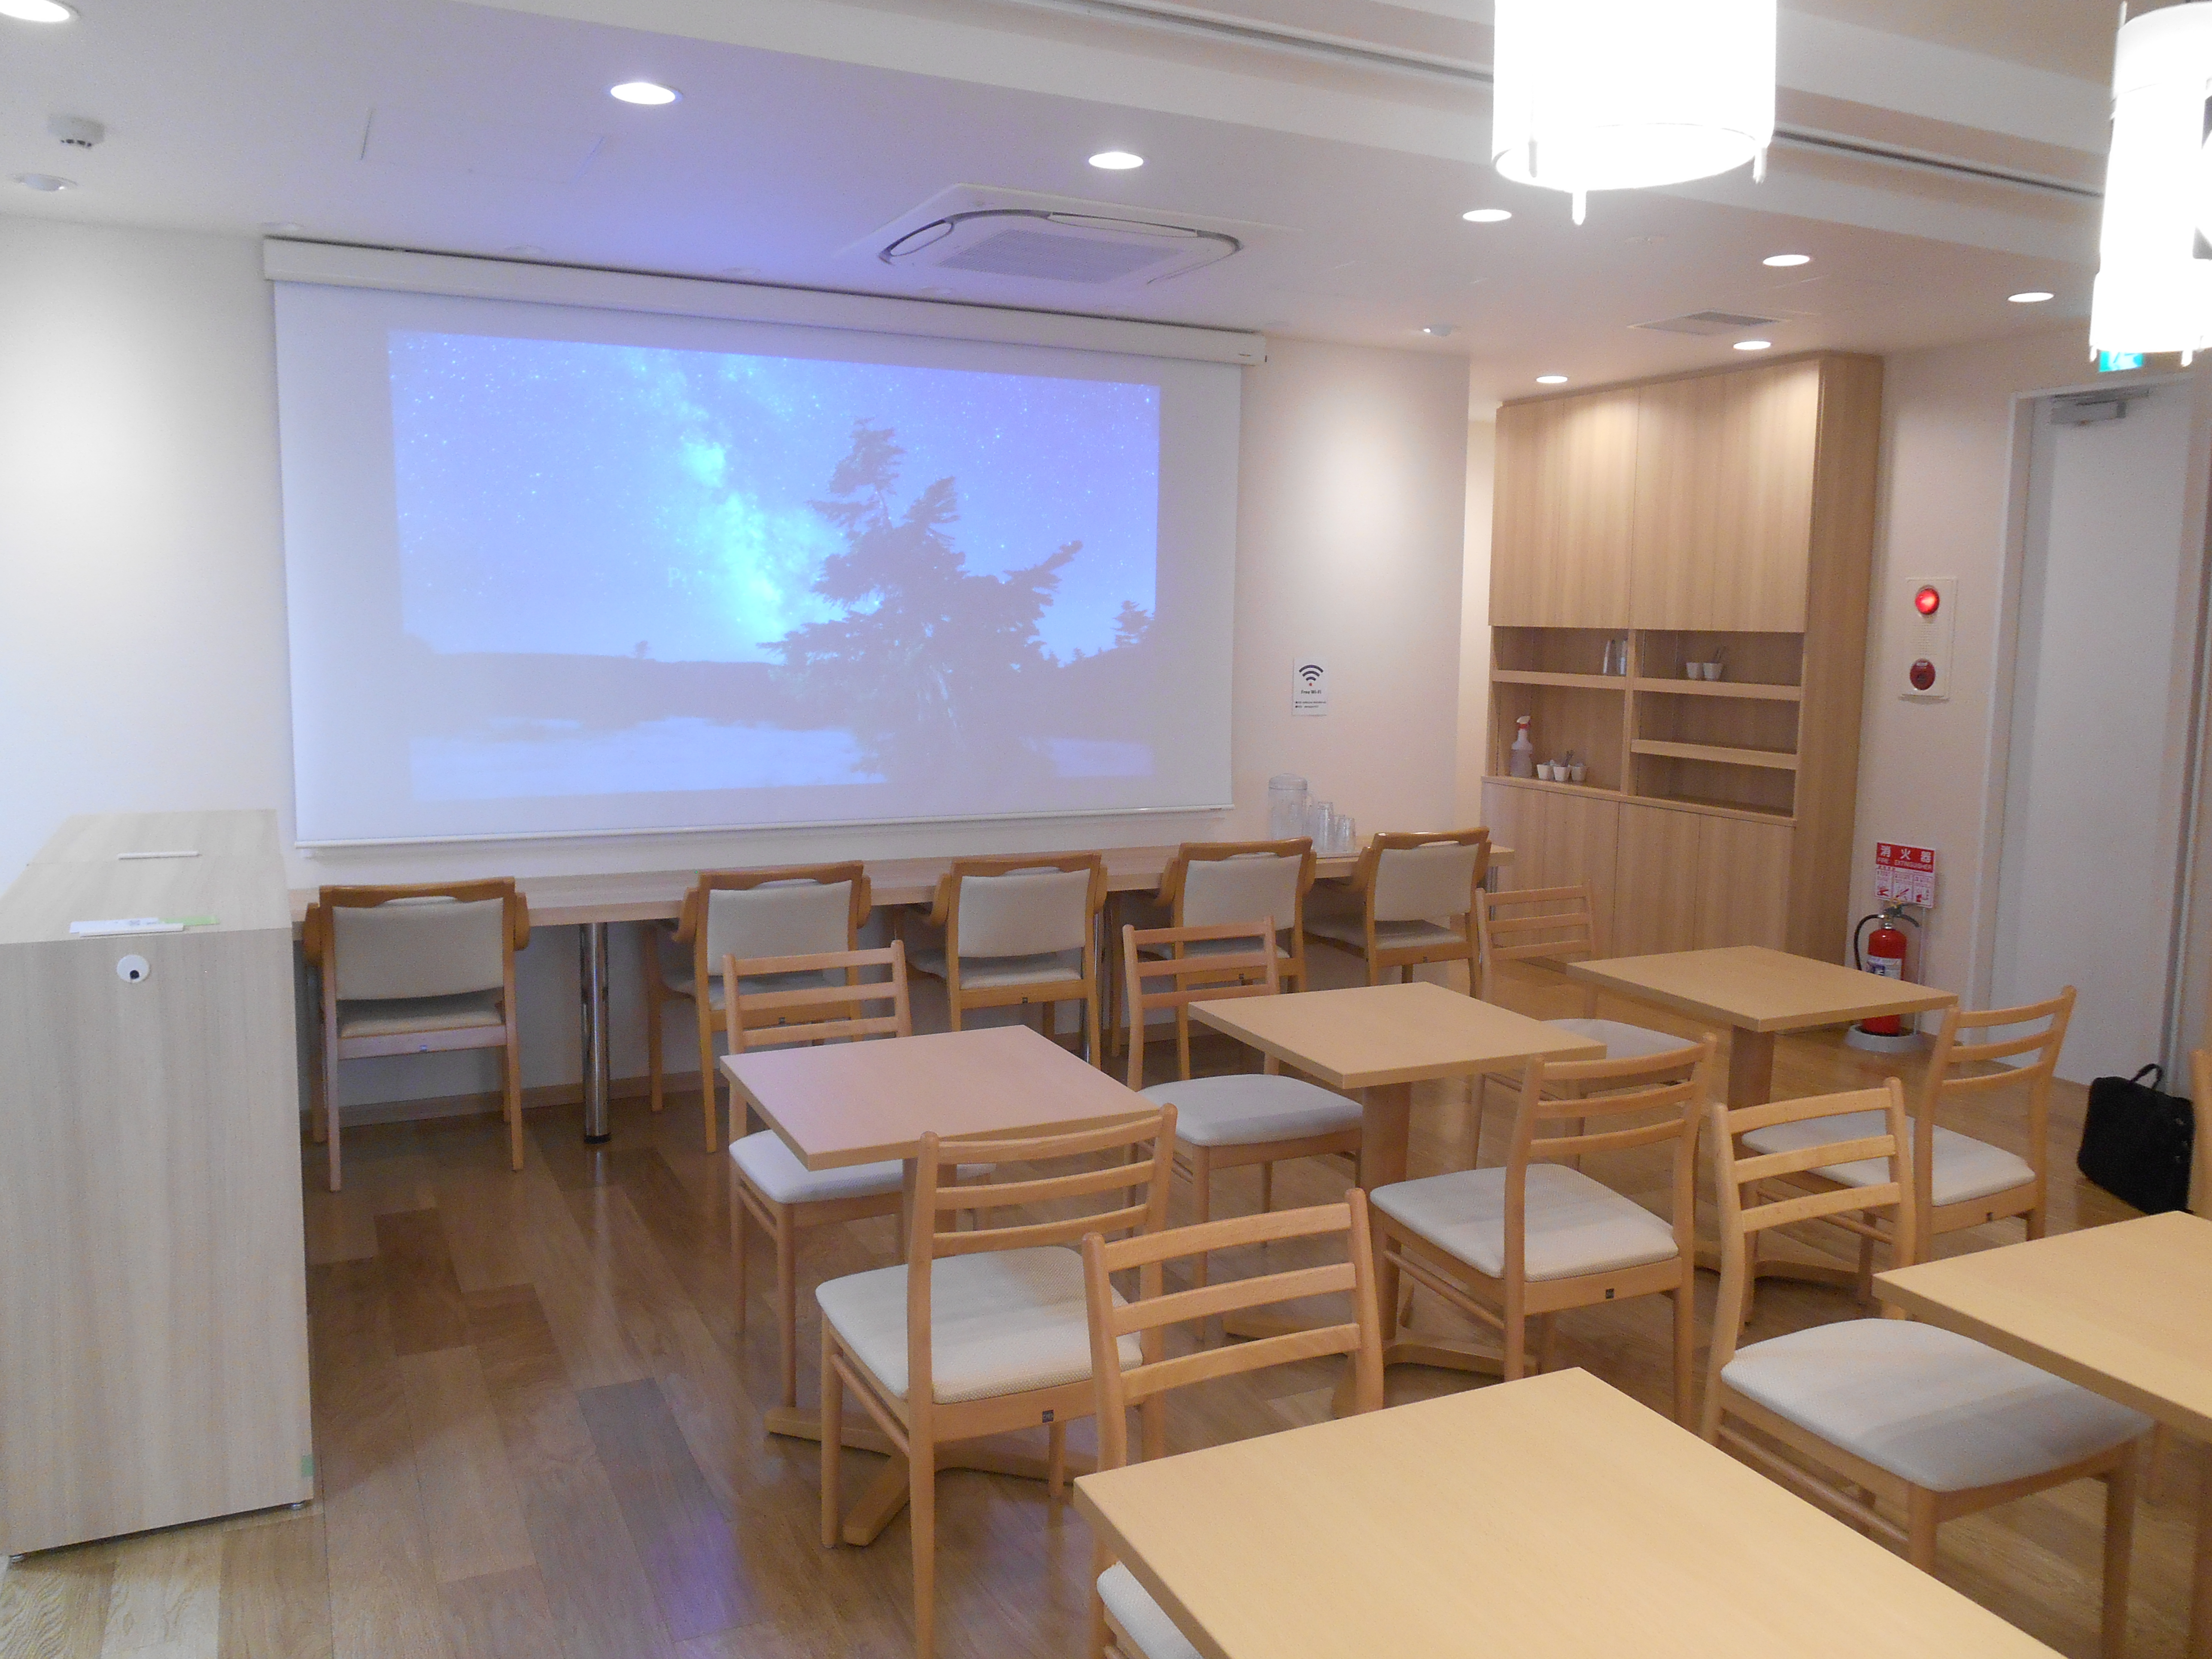 DSCN1360 - AoMoLink〜赤坂〜の第2回勉強会&交流会開催します。